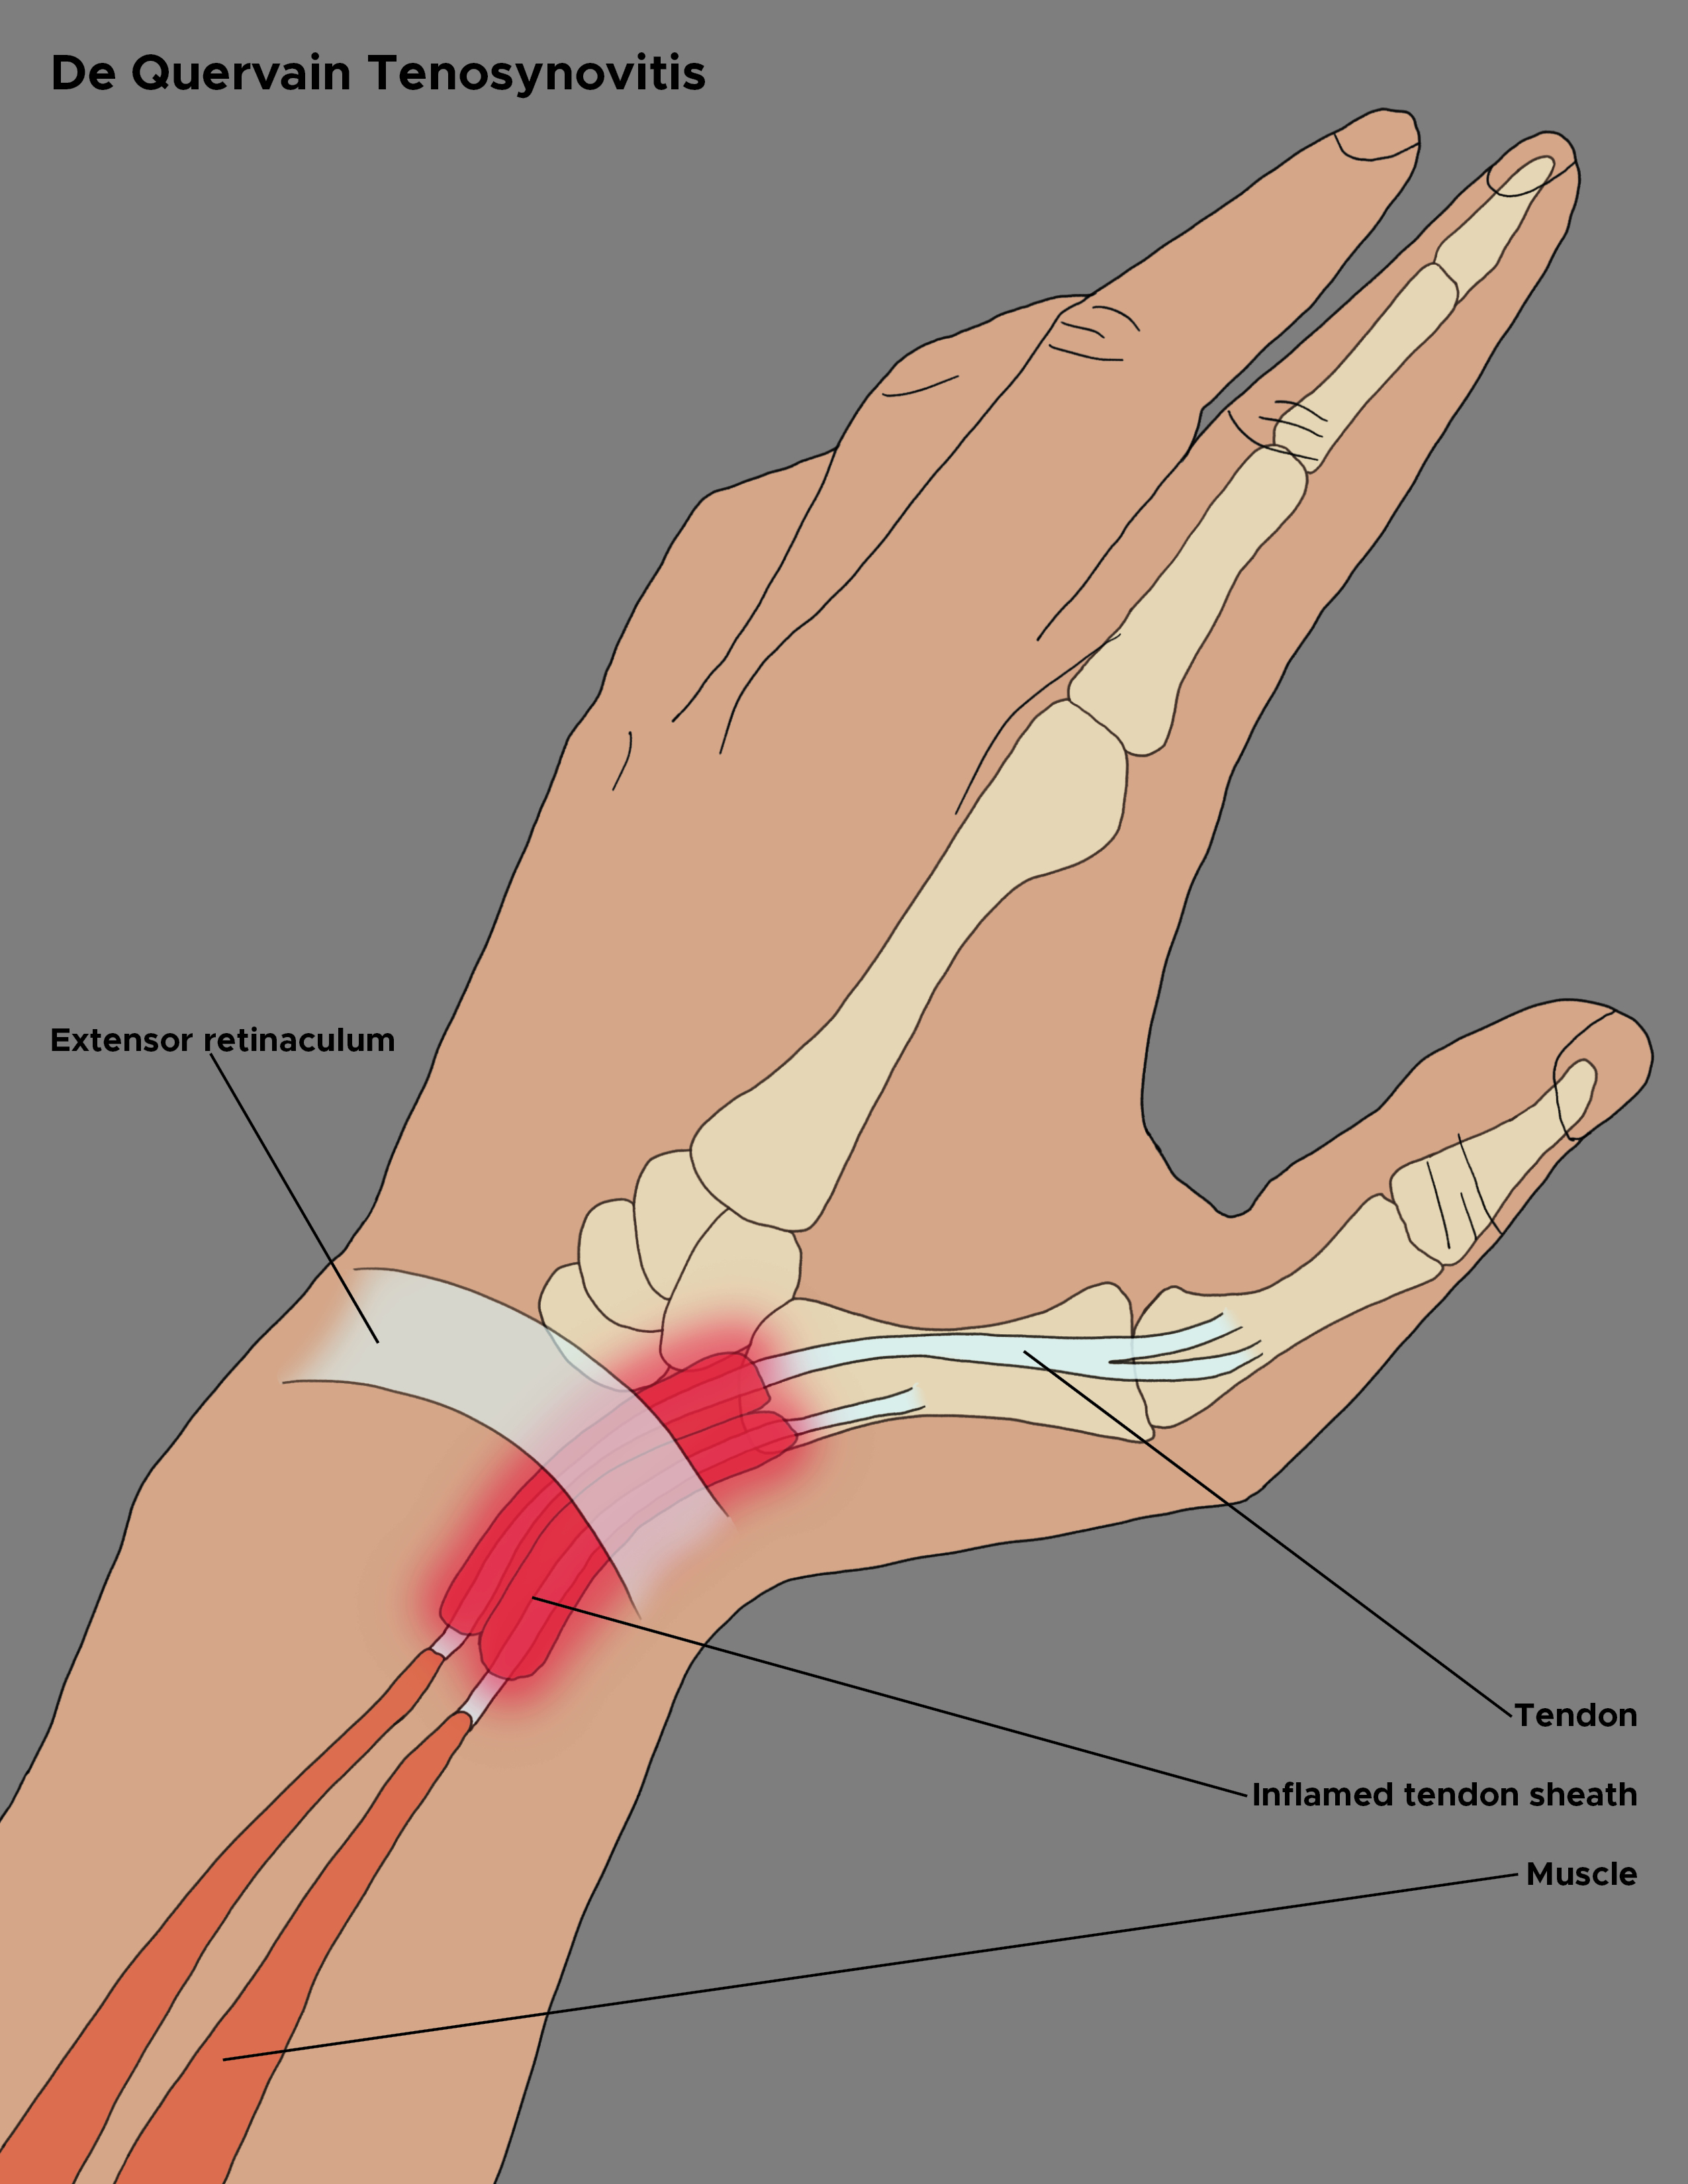 Illustration of De Quervain Tenosynovitis. Extensor retinaculum, wrist tendon, inflamed tendon sheath, muscle.